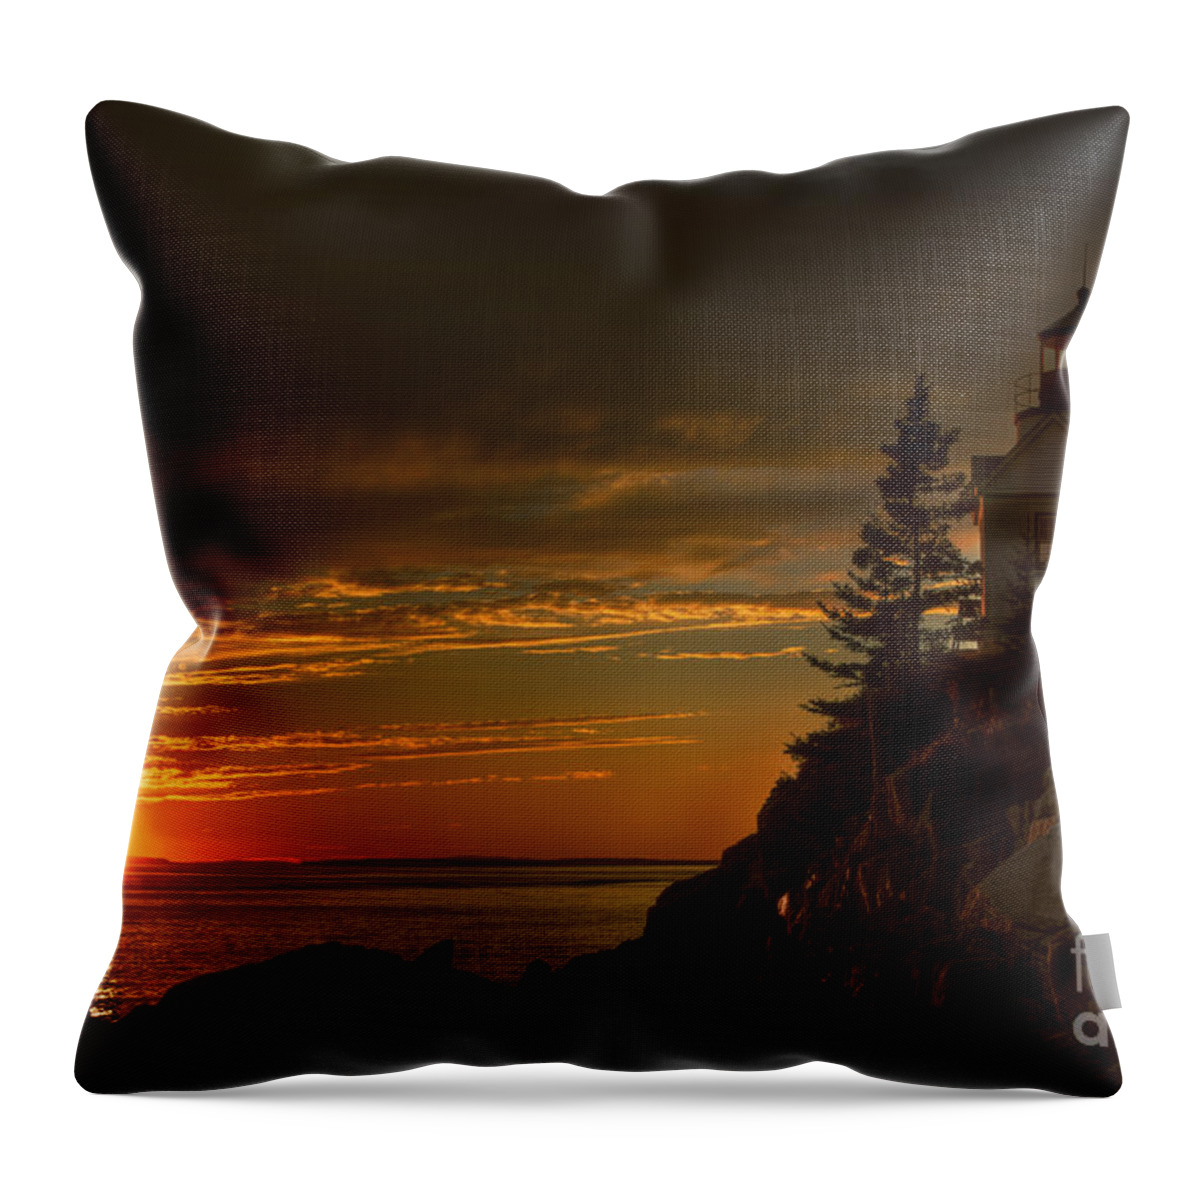 Acadia National Park Throw Pillow featuring the photograph Sunset at Bass Harbor Lighthouse by Oscar Gutierrez